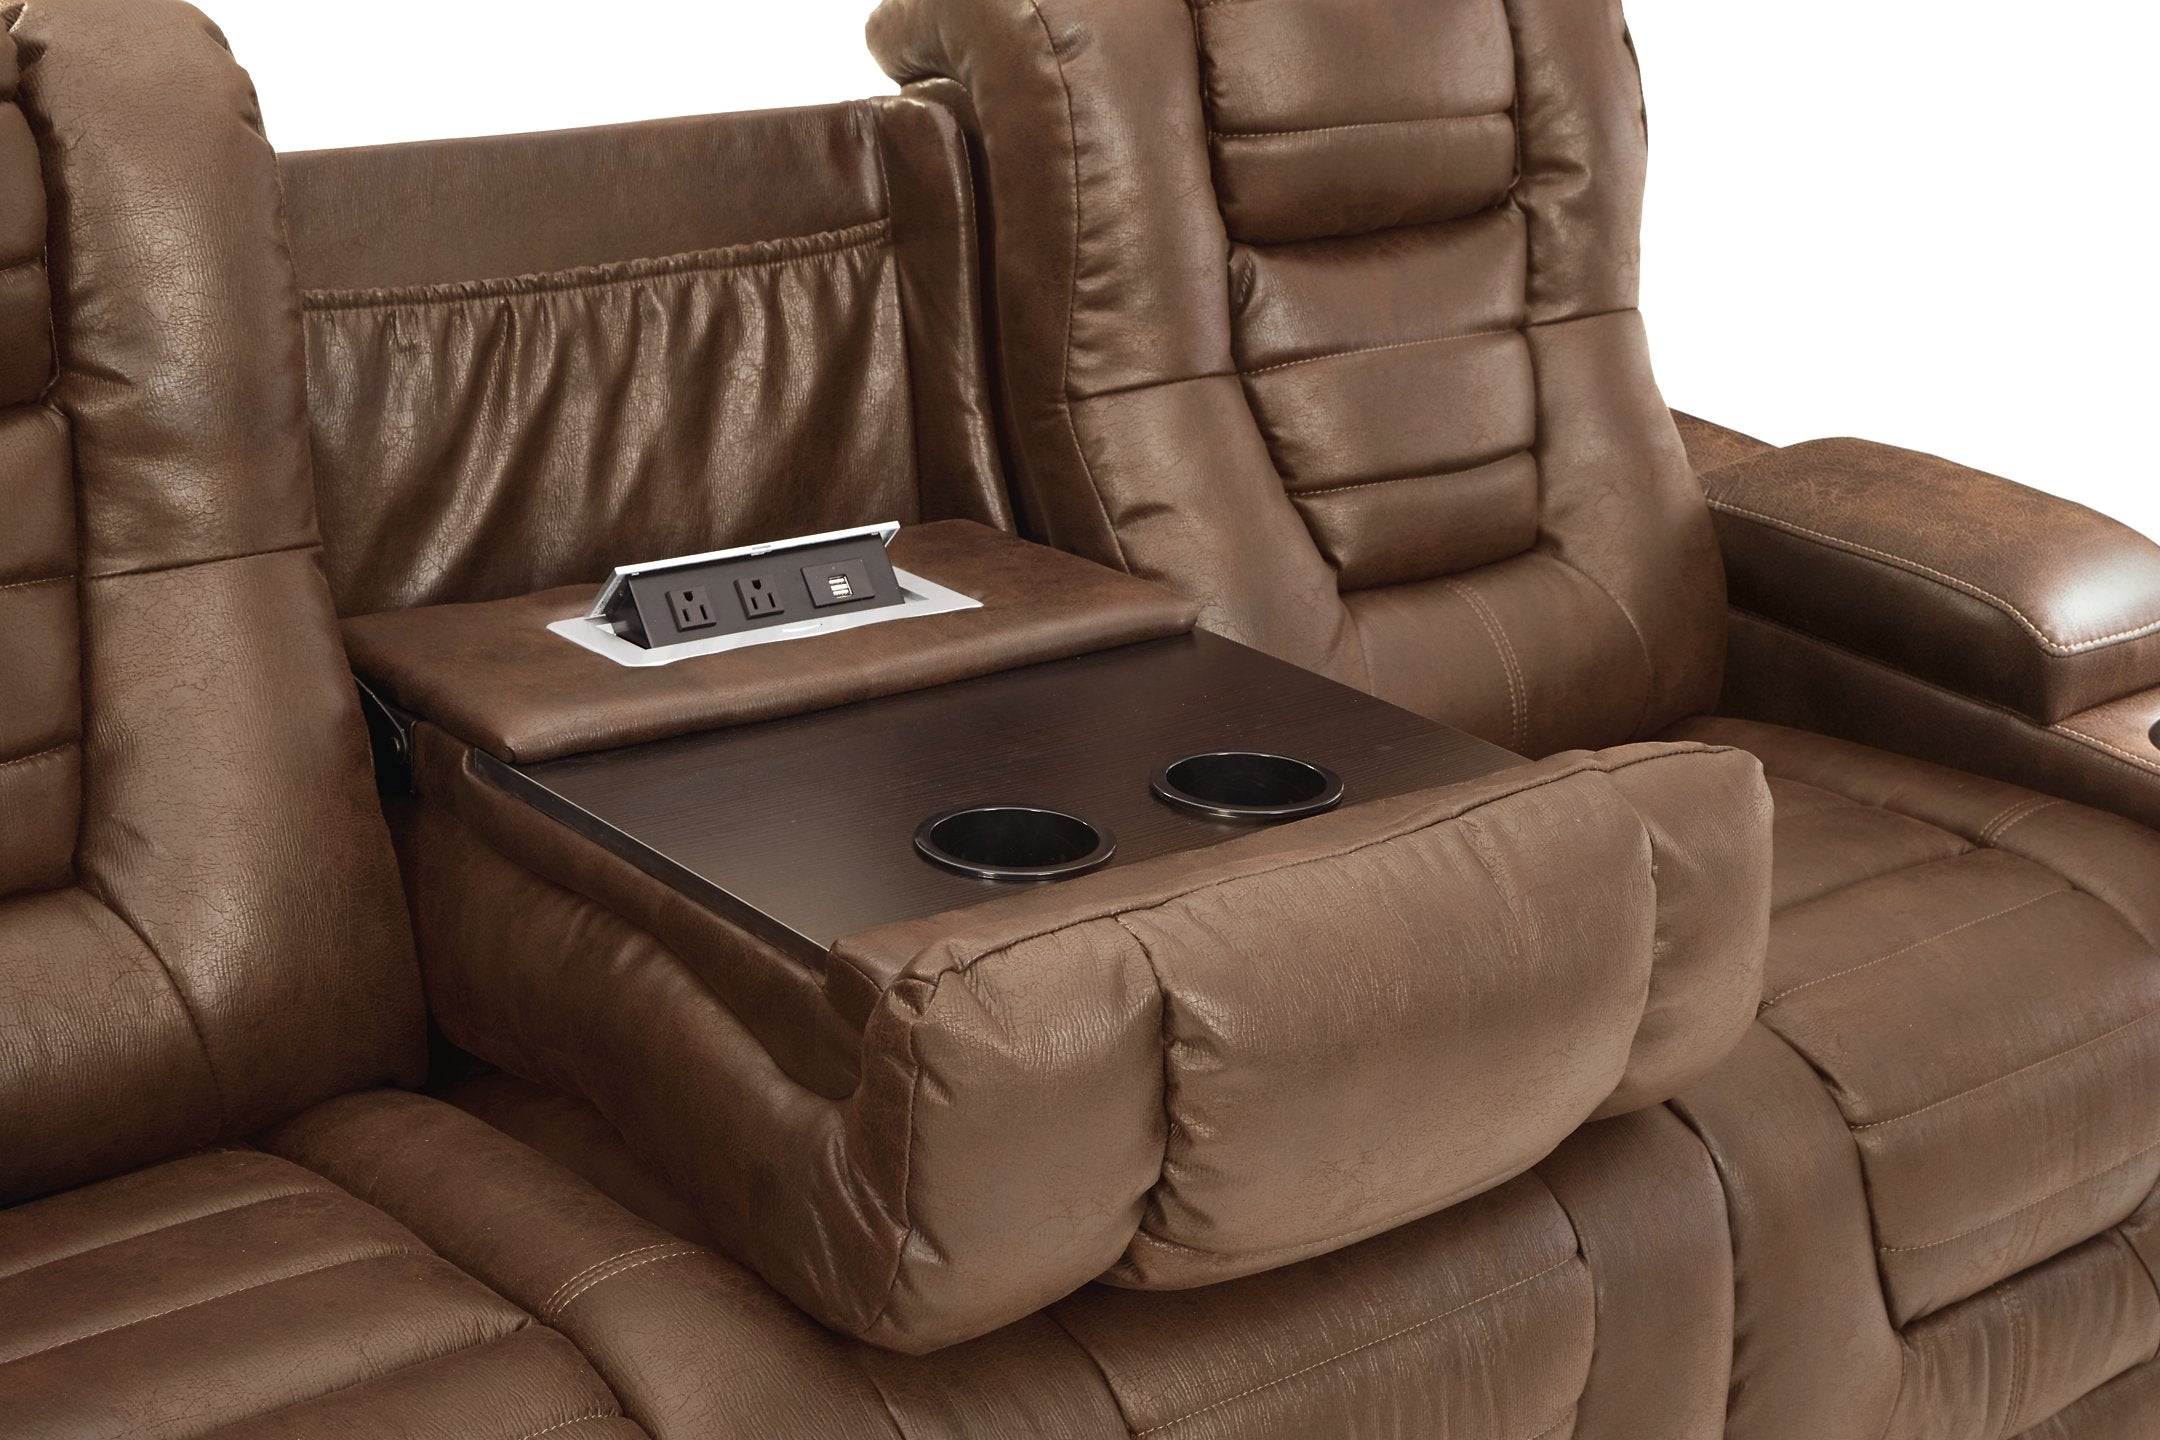 Owner's Box Power Reclining Sofa - Romeo & Juliet Furniture (Warren,MI)